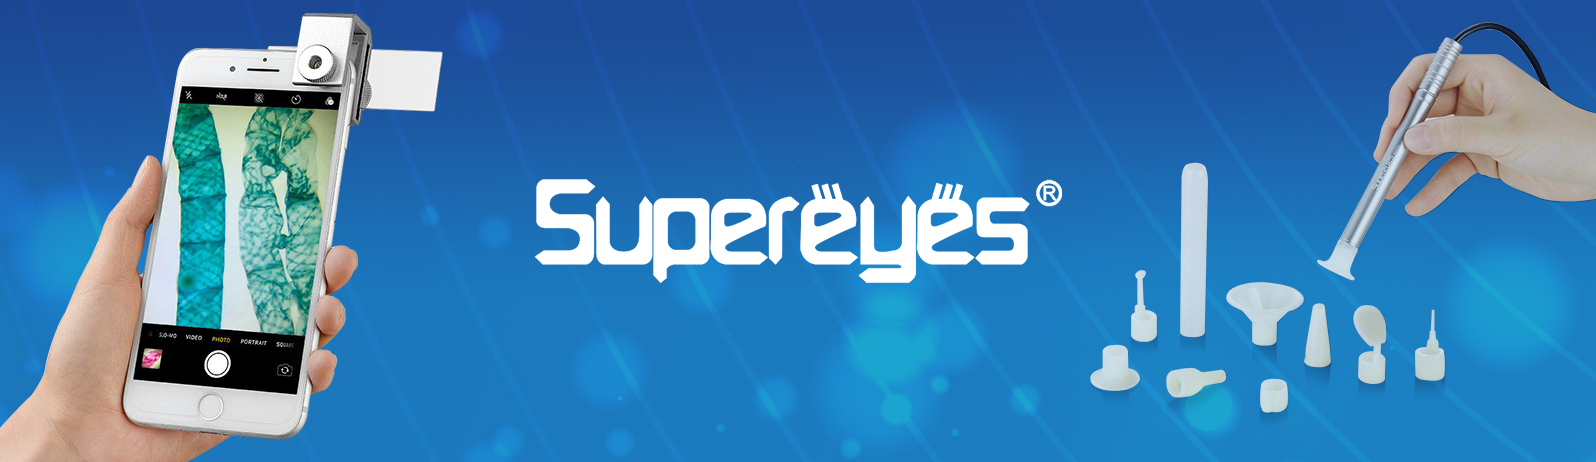 Supereyes